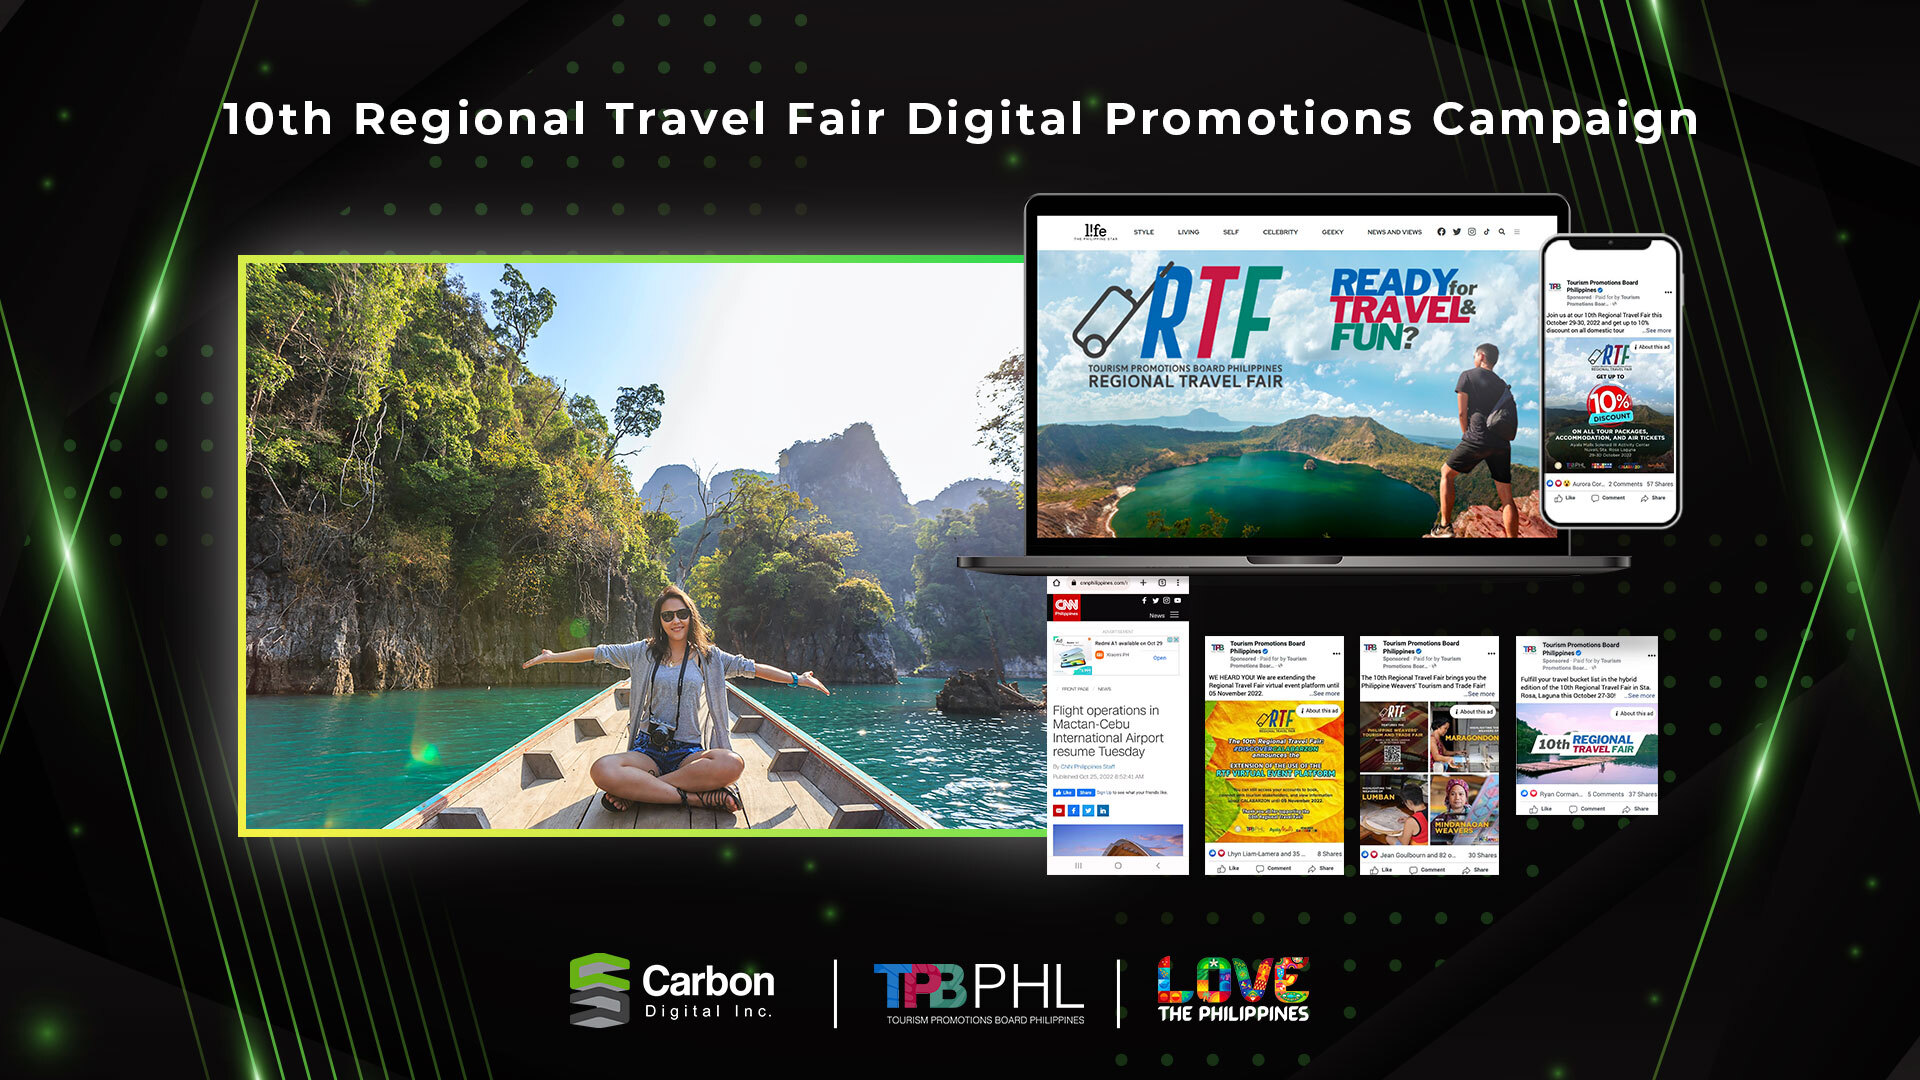 10th Regional Travel Fair Digital Promotions Campaign, CARBONDIGITAL, INC. - Vega Website Awards Winner